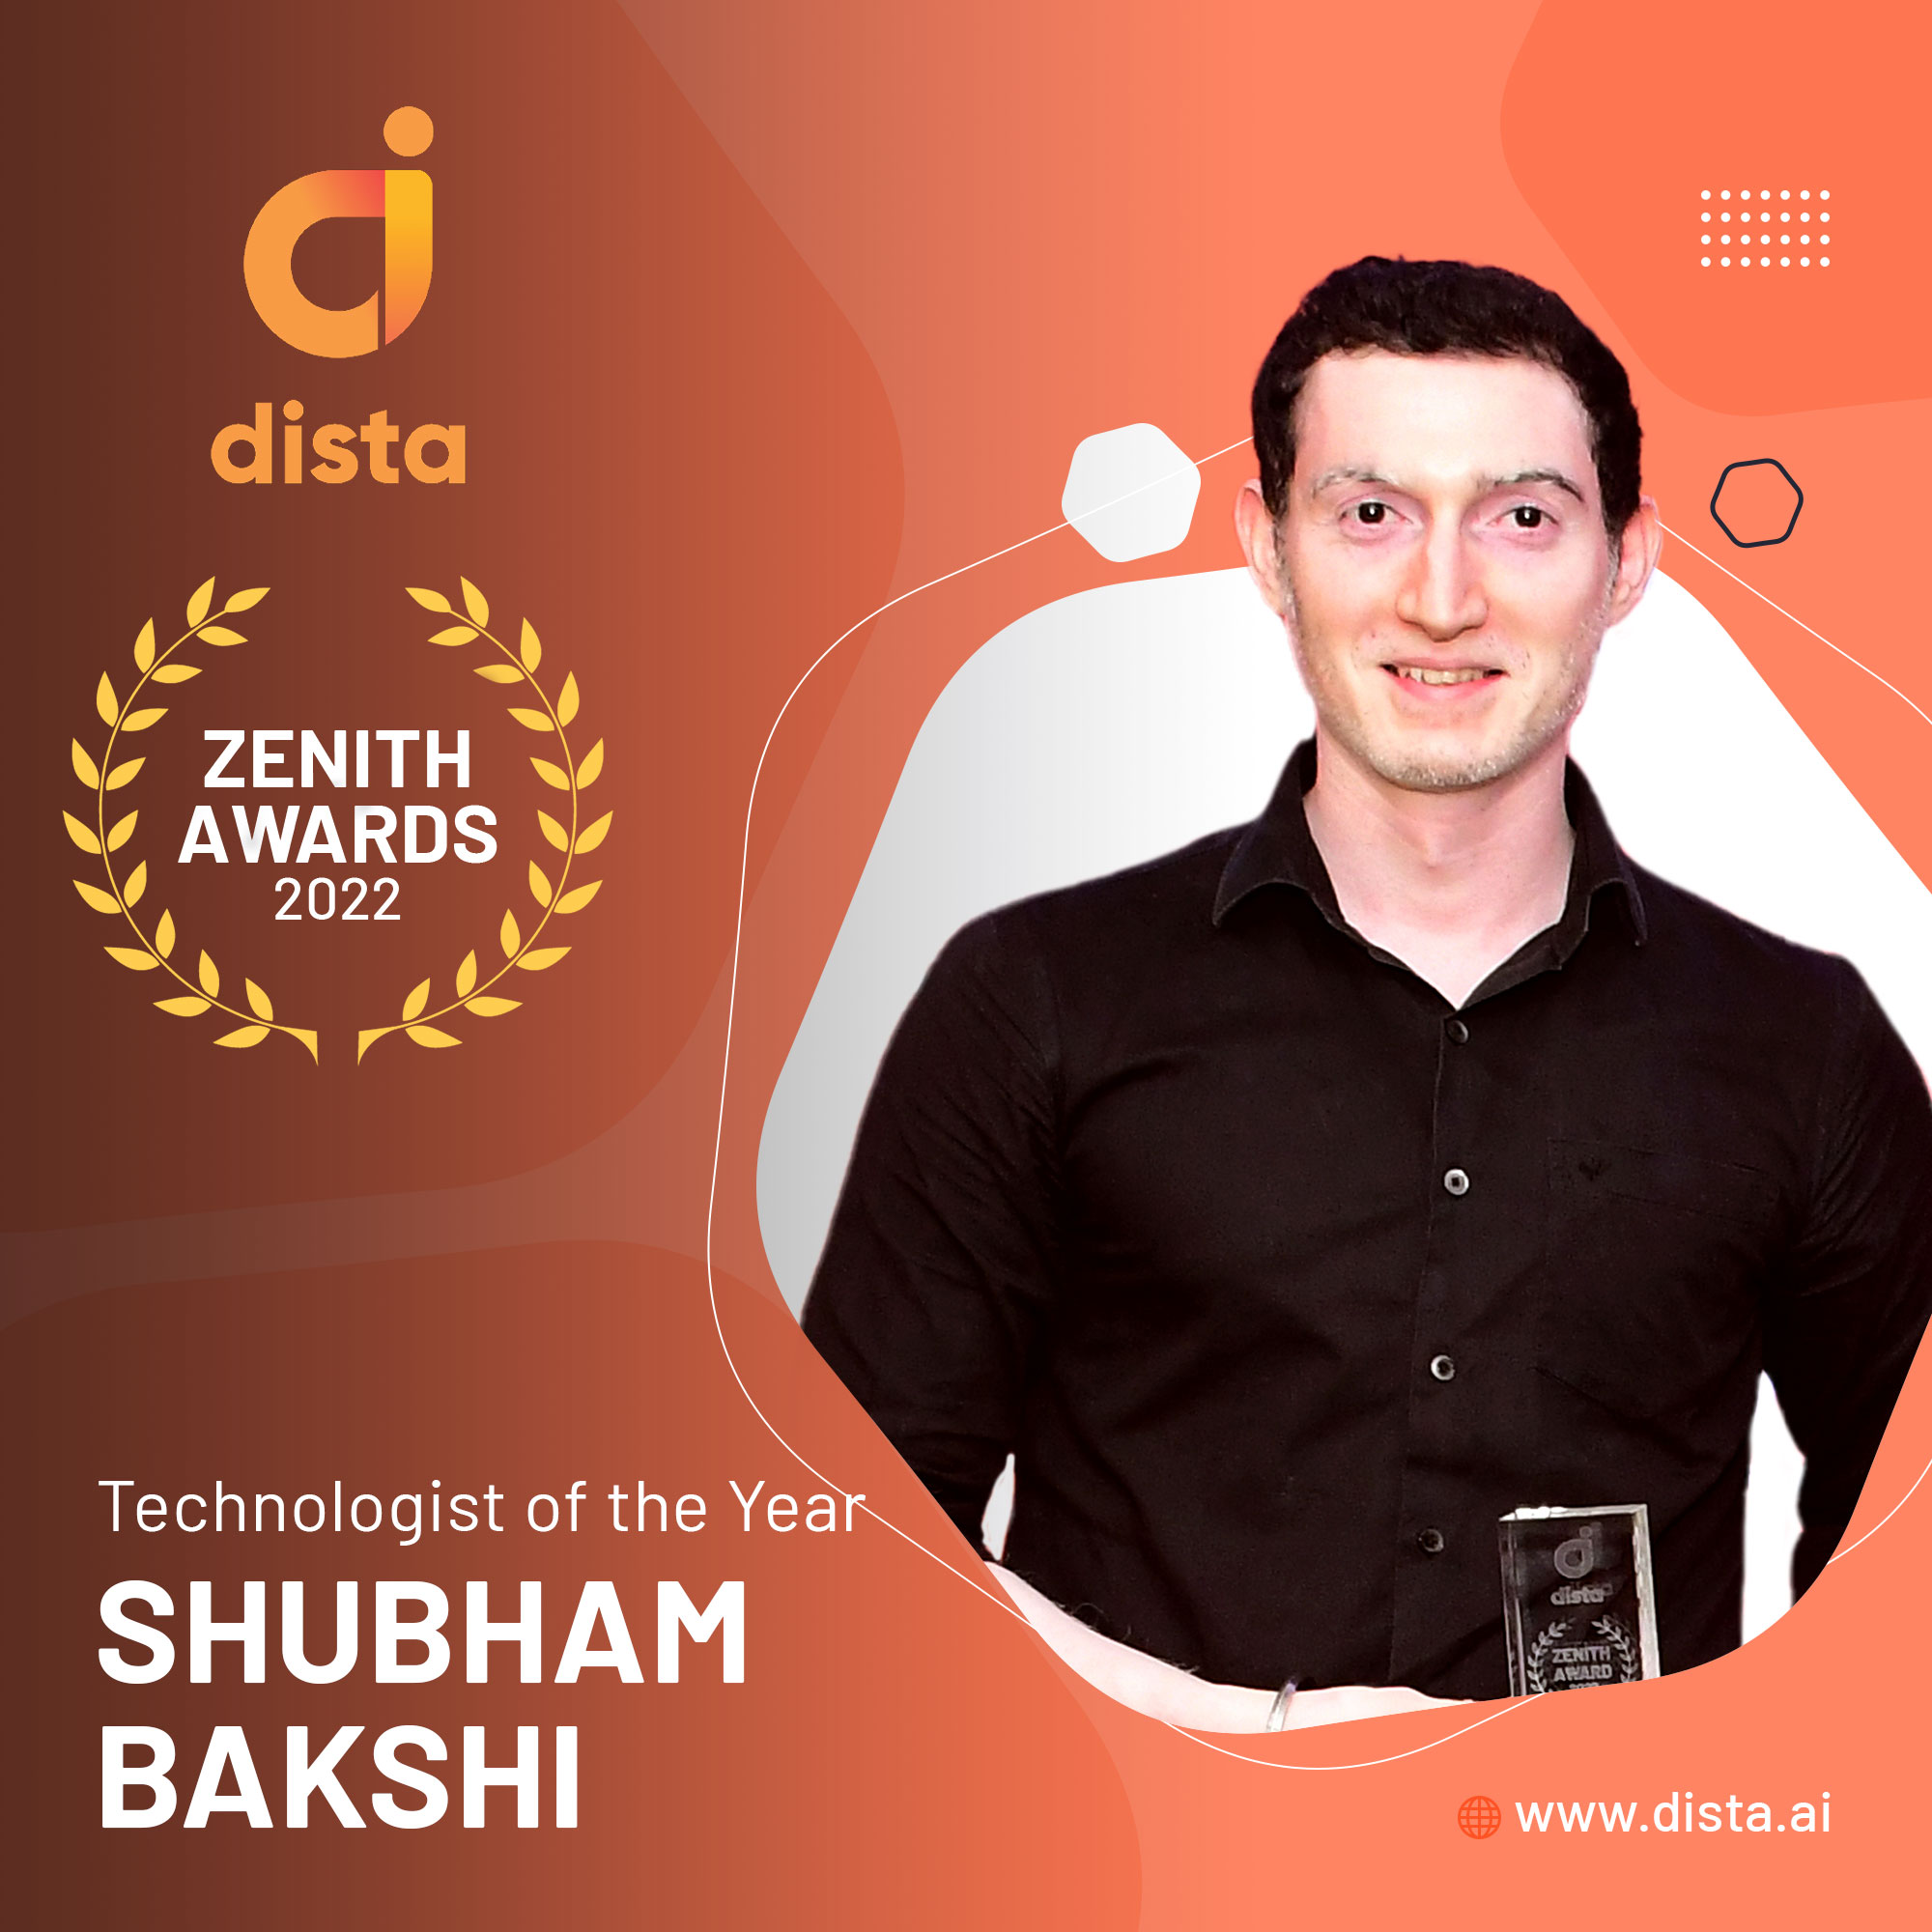 Shubham Bakshi - Dista Zenith Awards 2022